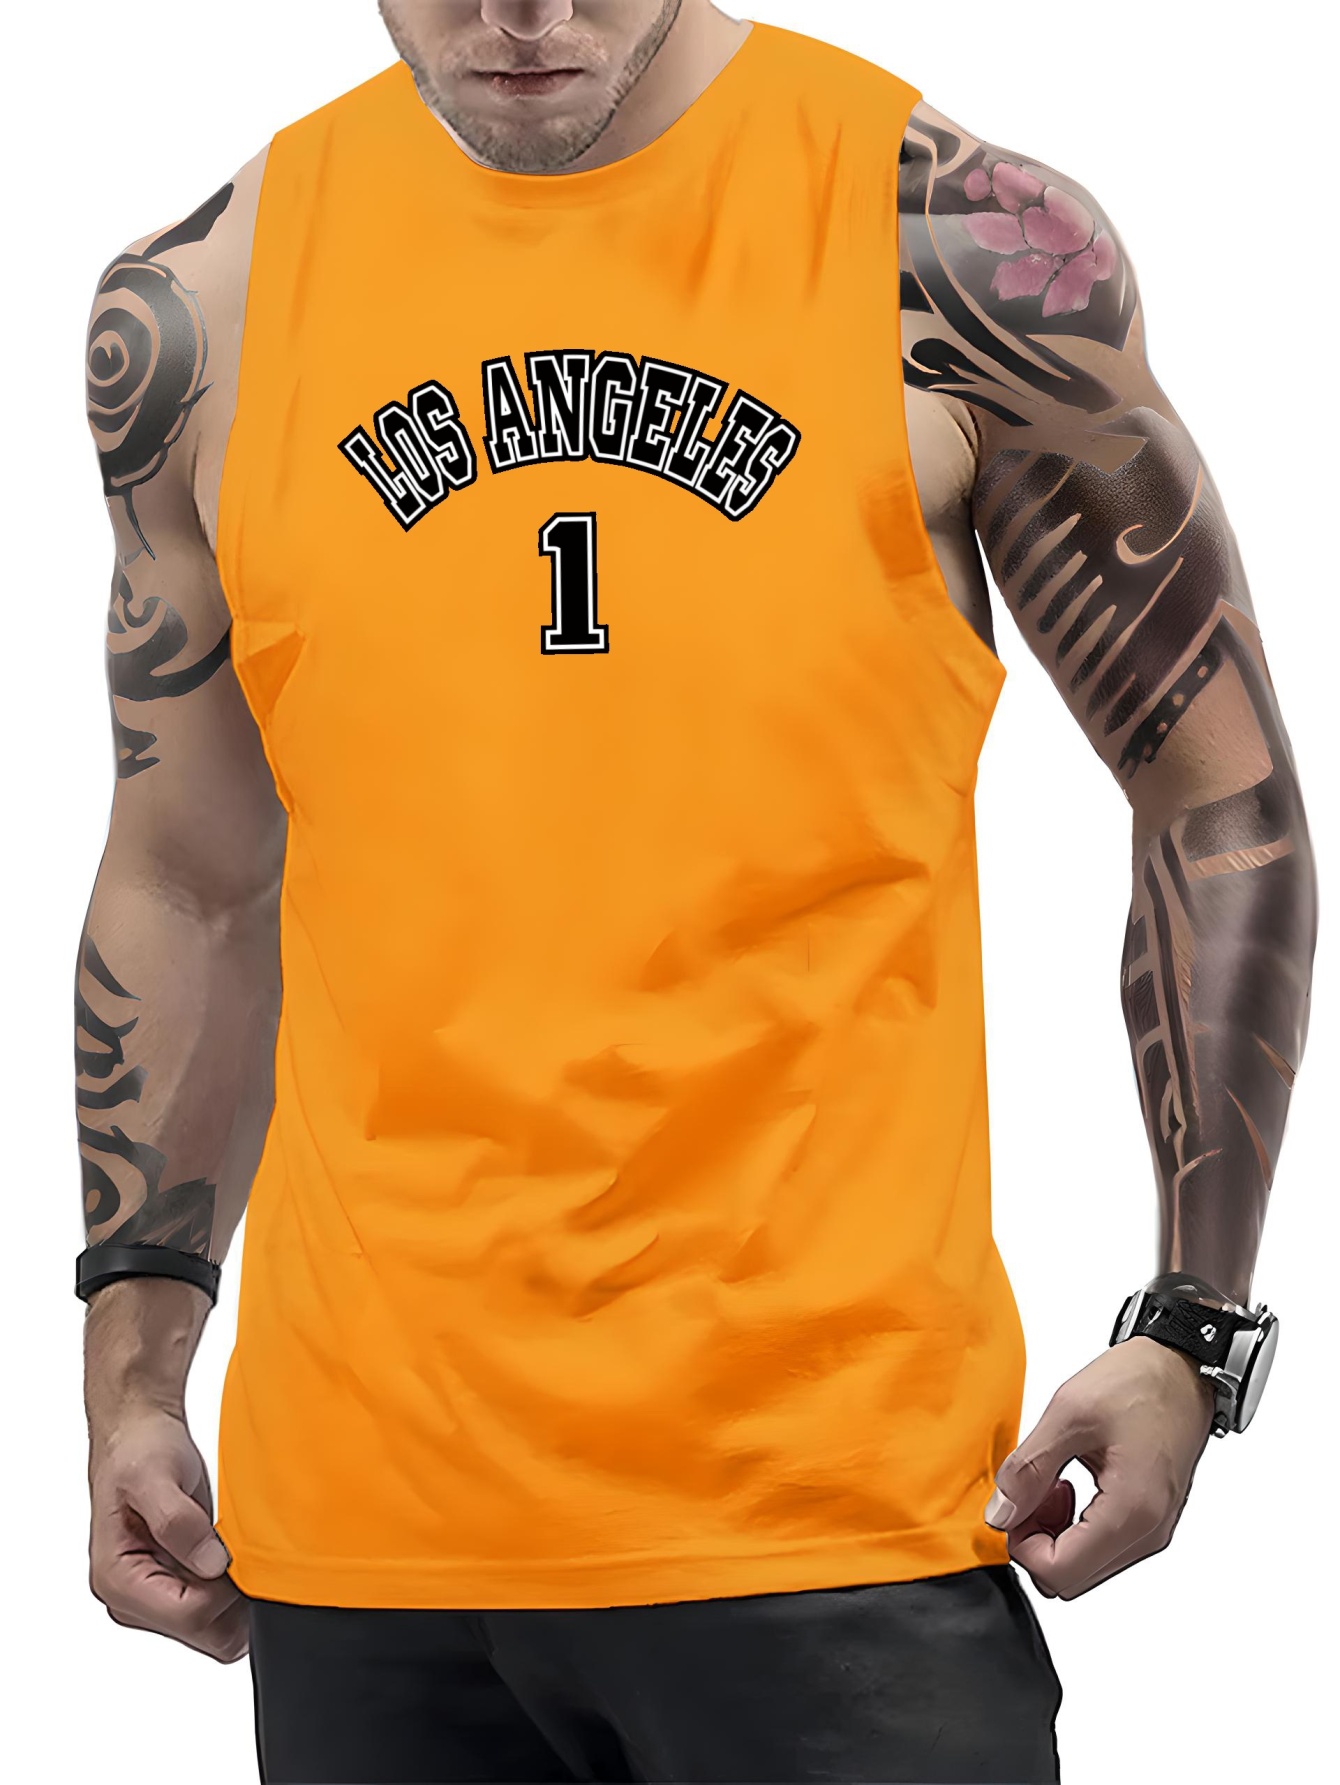 Los Angeles Dodgers MLB Majestic Blue Jersey Tank Top Men's XL